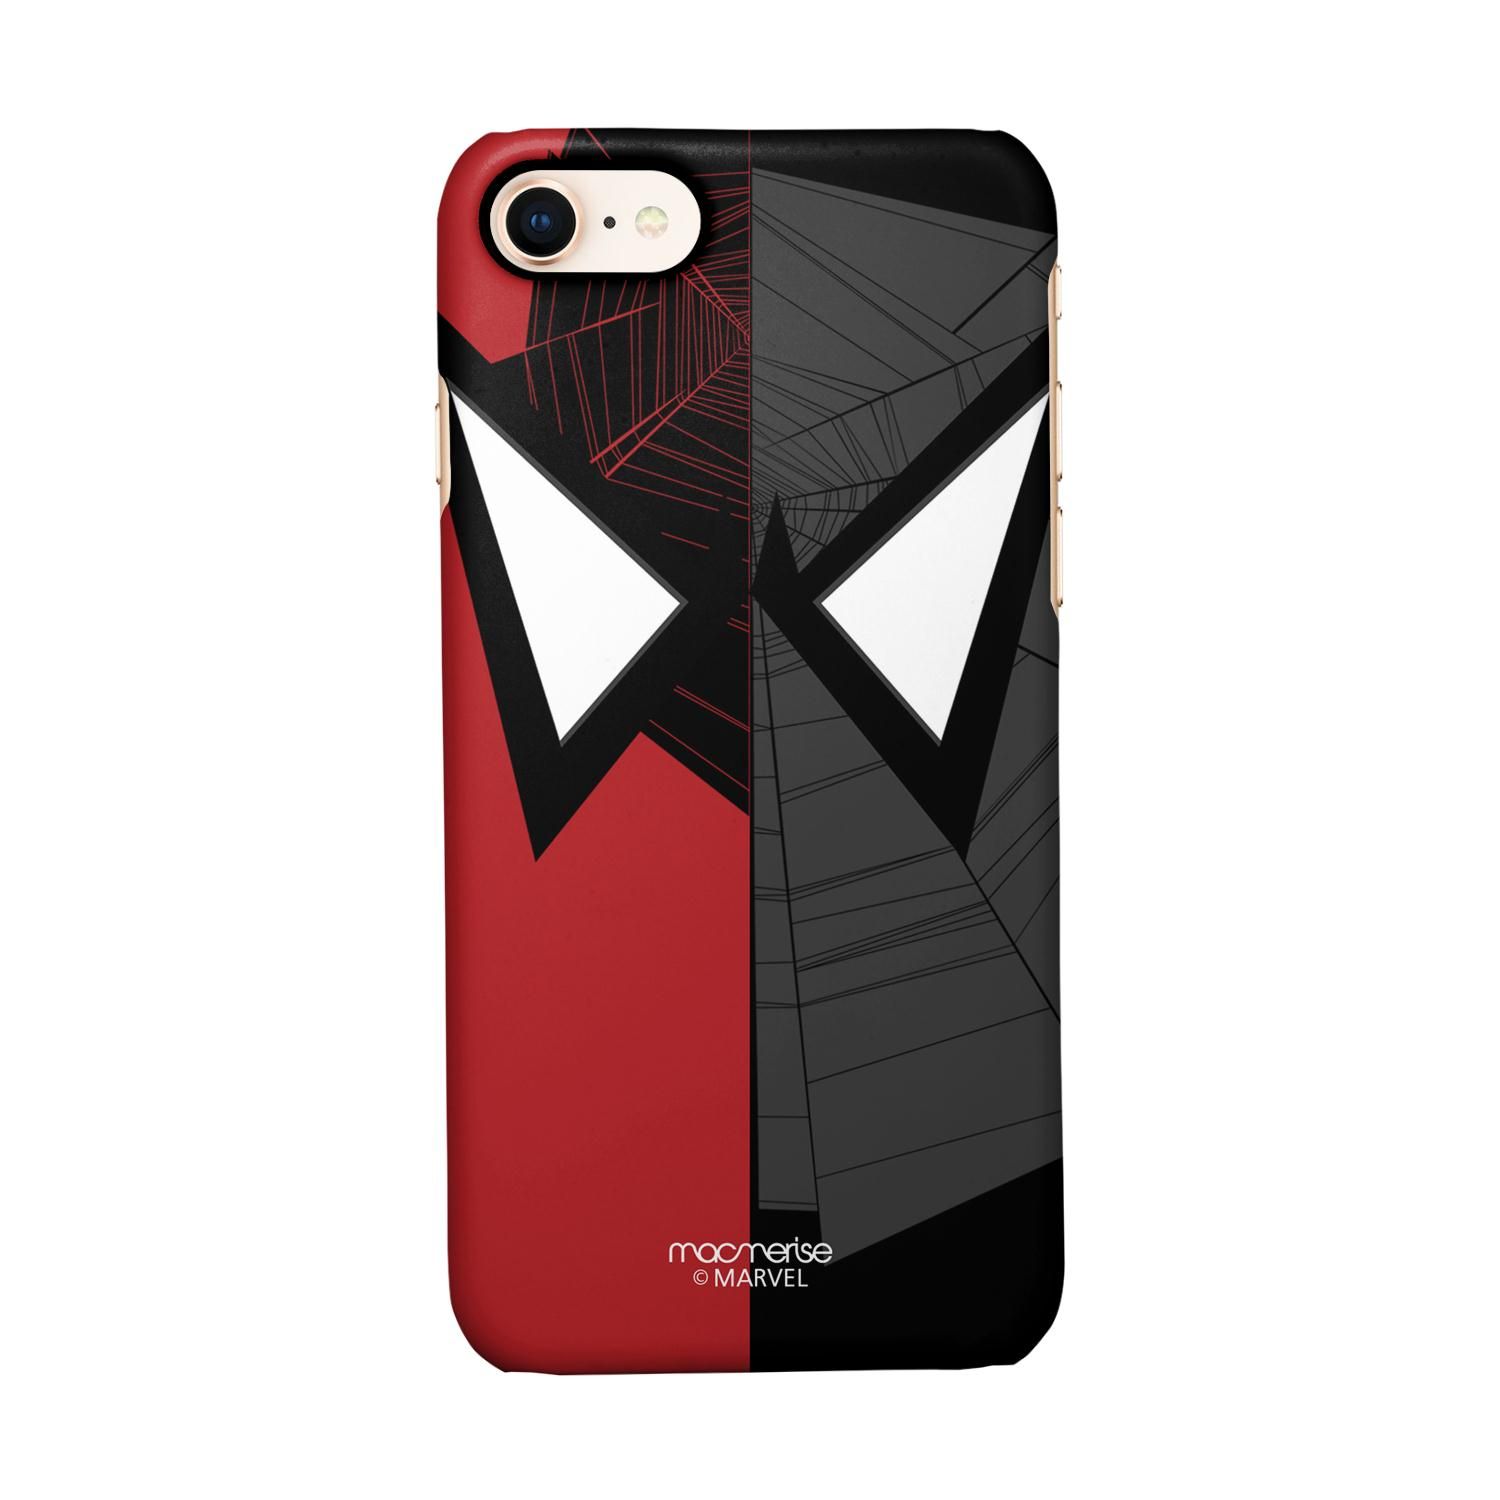 Buy Face Focus Spiderman - Sleek Phone Case for iPhone 7 Online